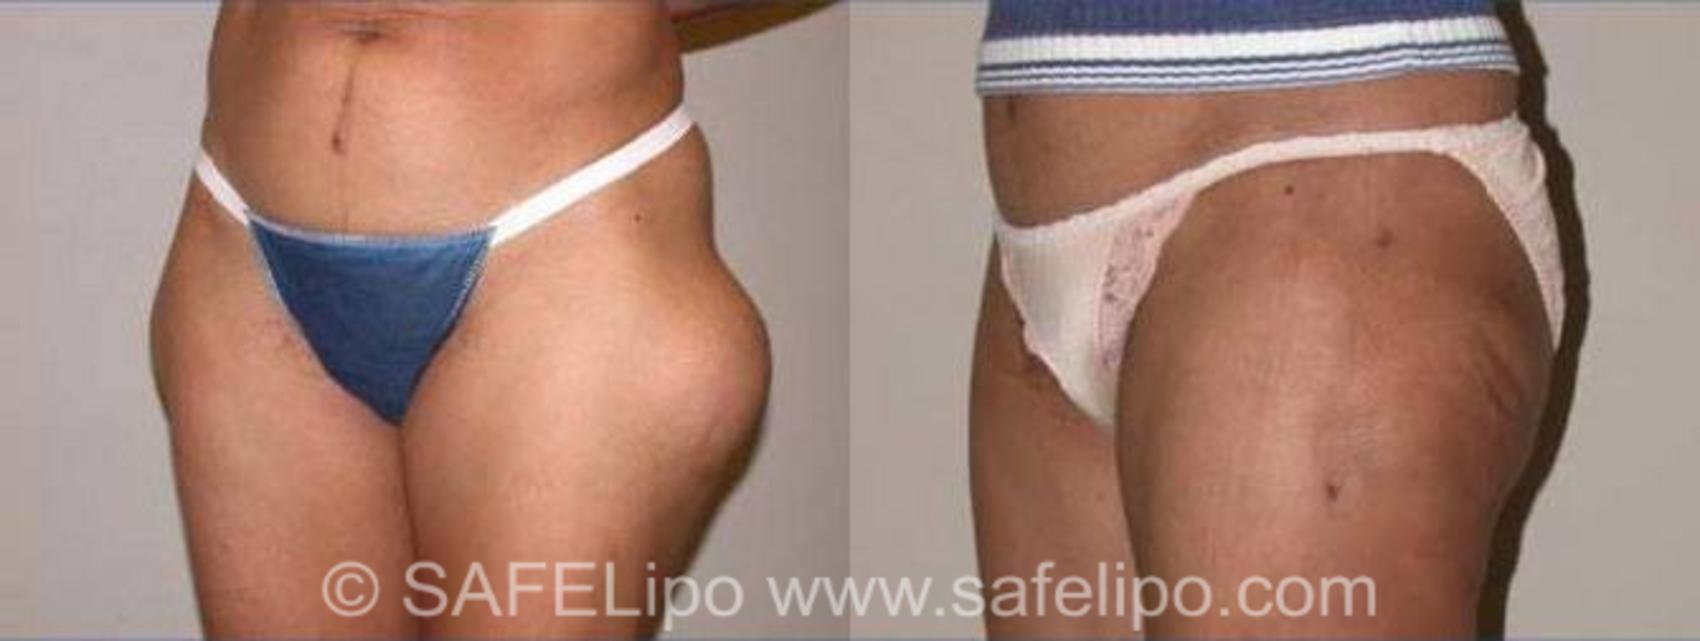 SAFELipoHD® Case 142 Before & After View #2 | SAFELipo®